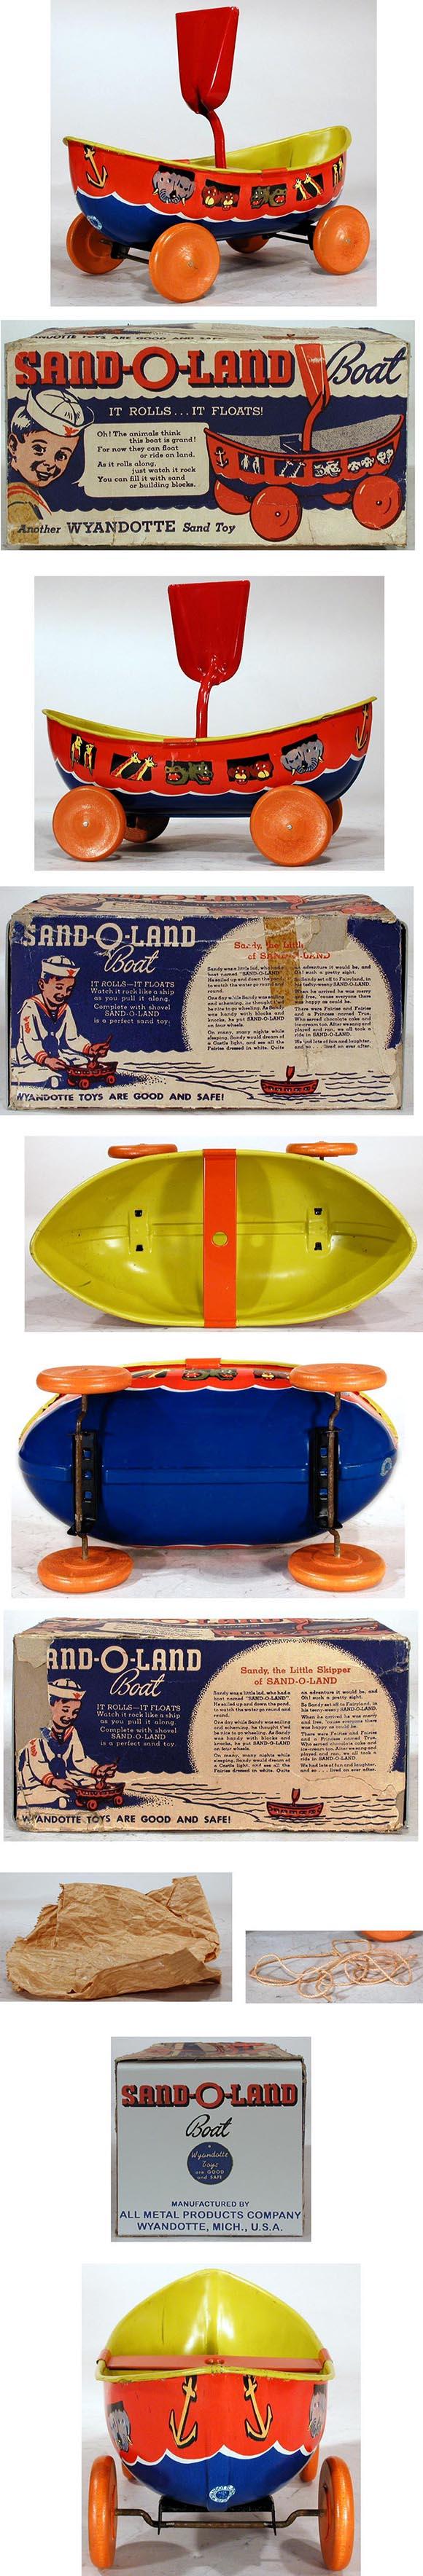 1941 Wyandotte, Sand-O-Land Boat in Original Box